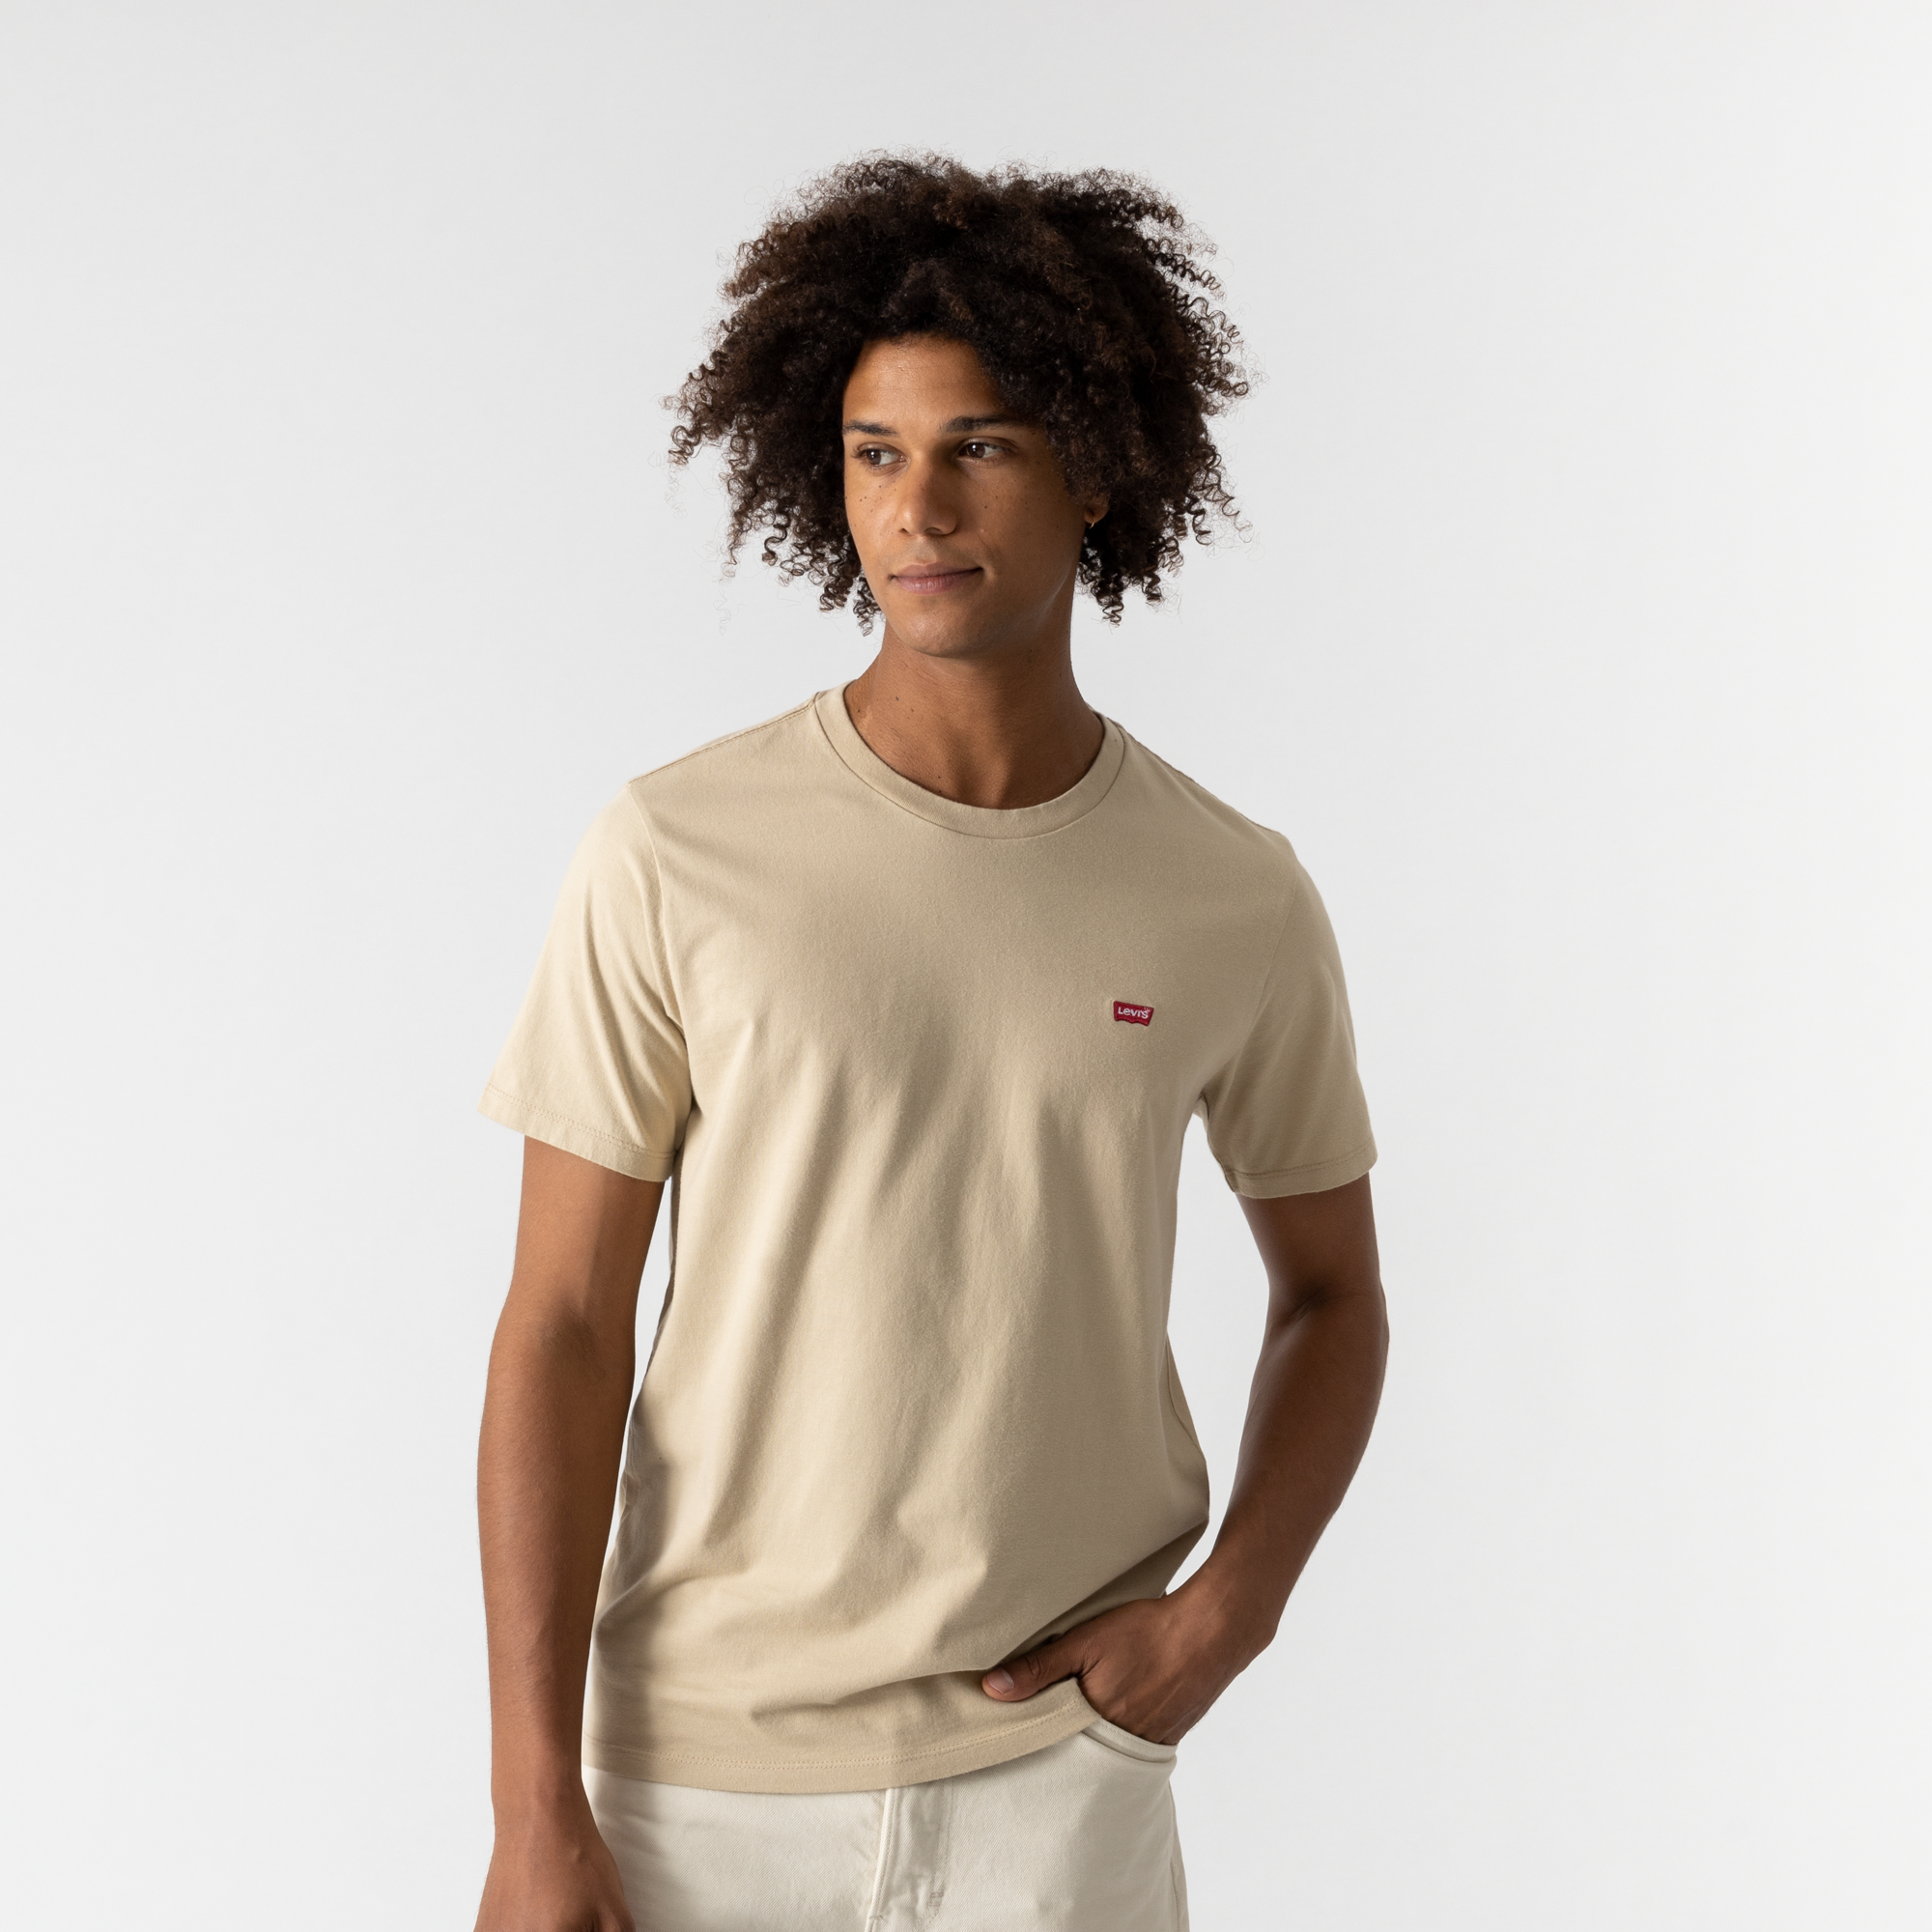 Levis Tee Shirt Original  - beige - Size: xs - male